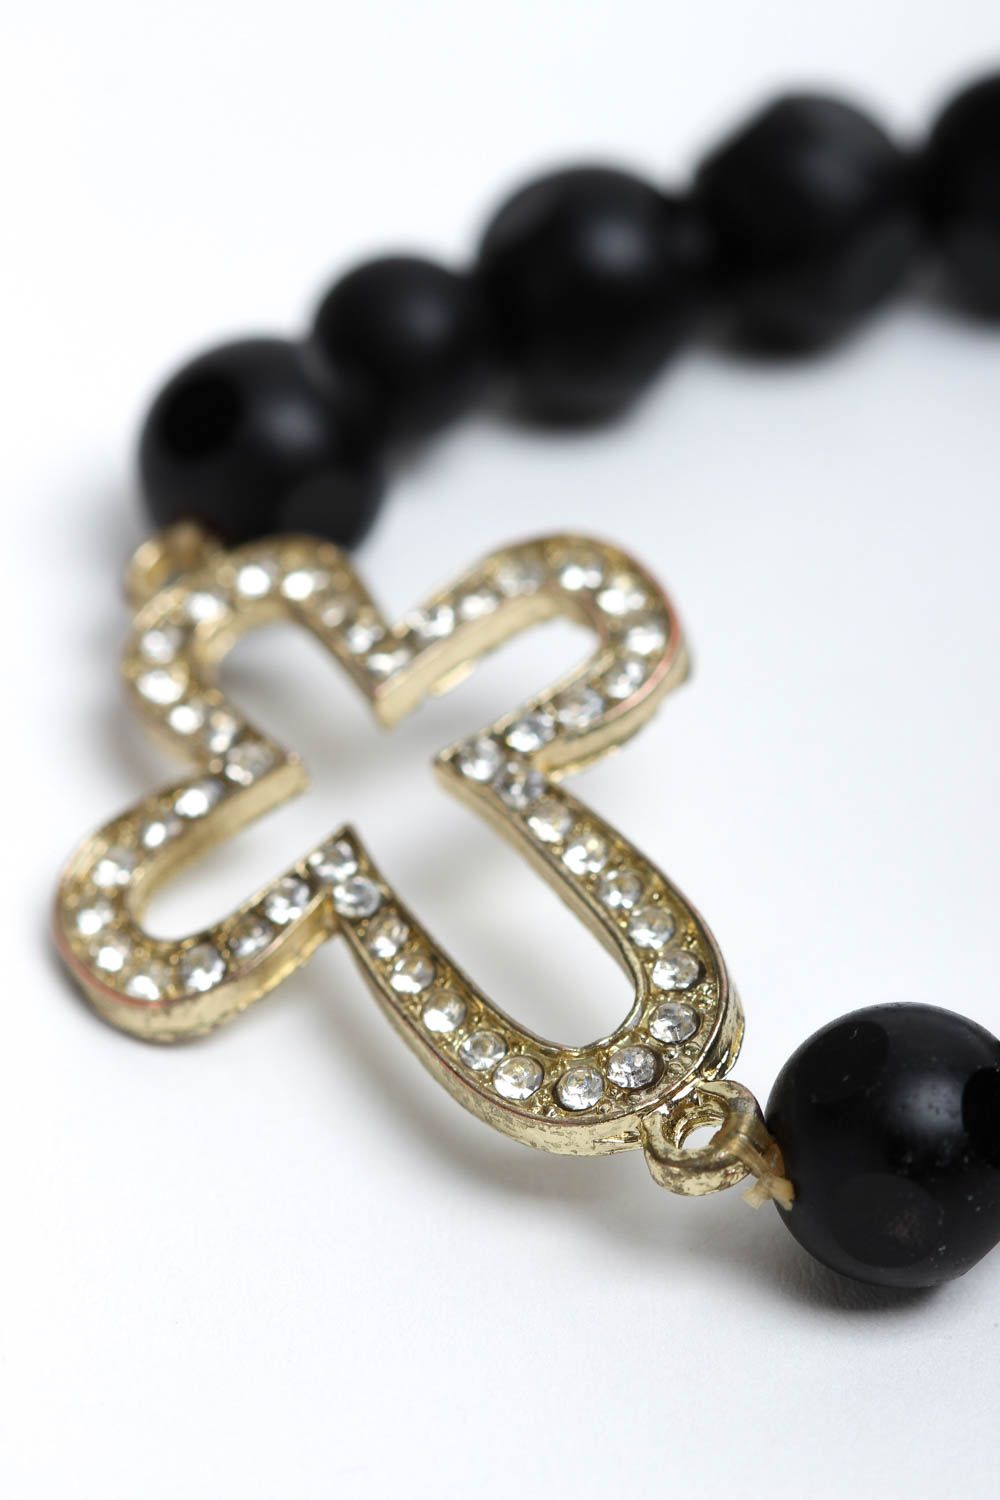 Beaded bracelet evening designer bracelet fashion jewelry with natural stones photo 3